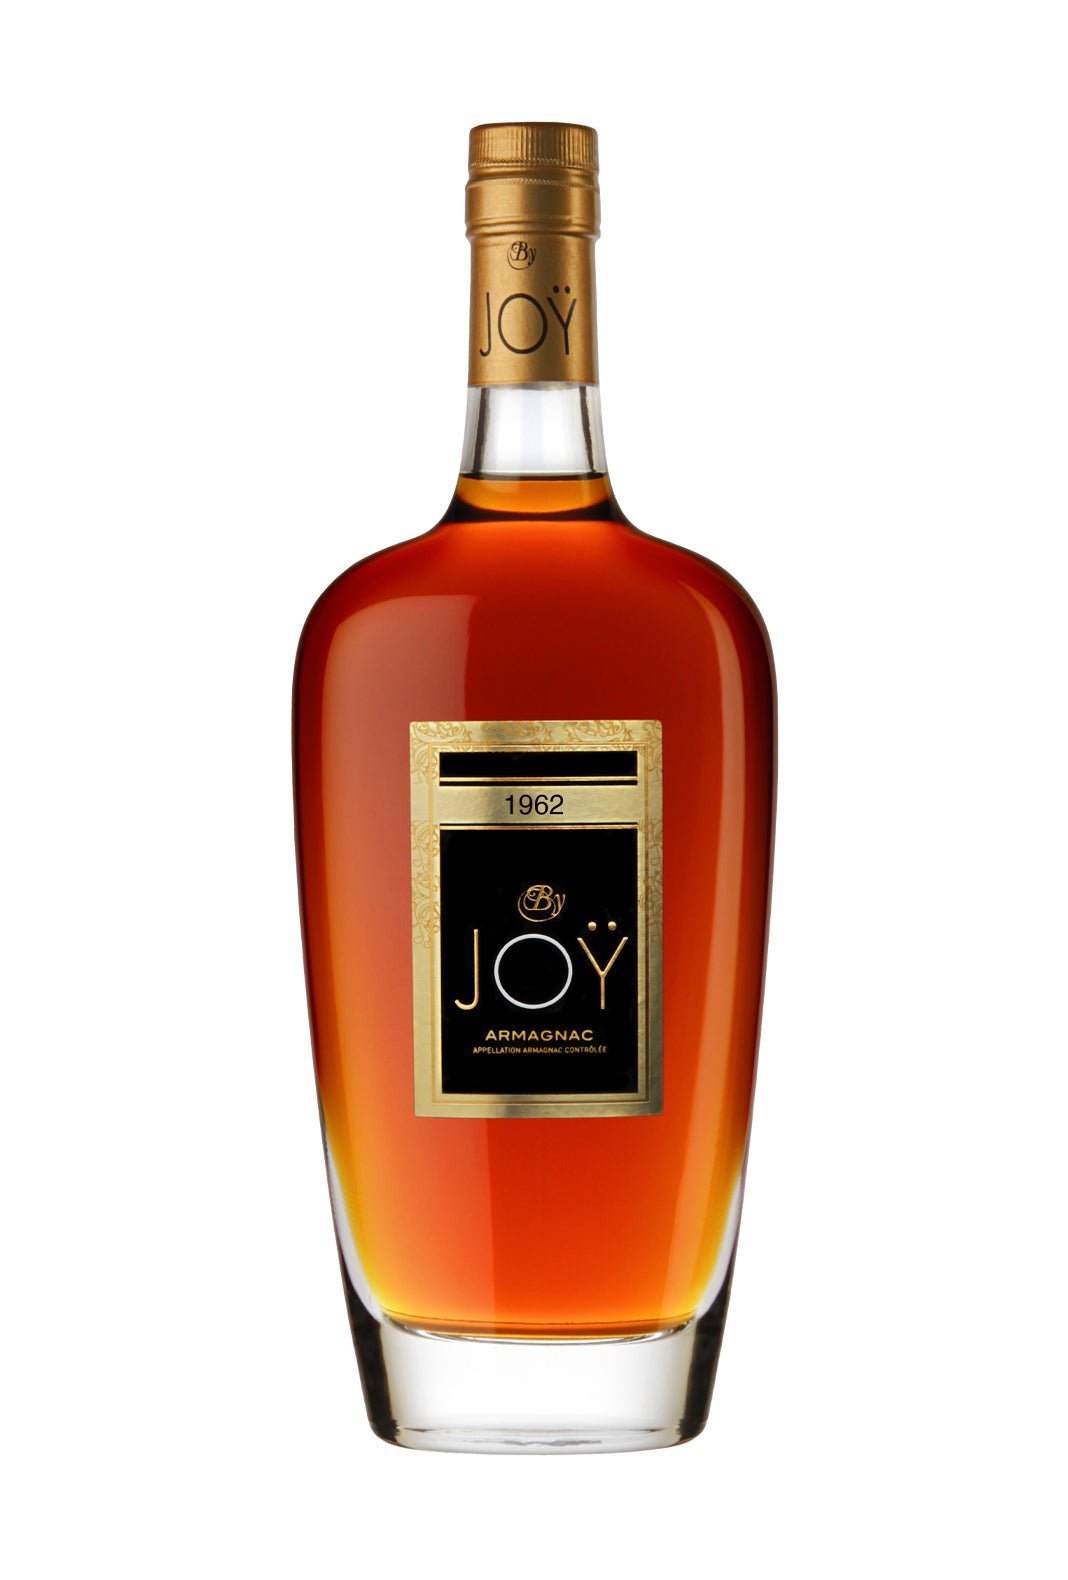 Domaine de Joy 1962 Armagnac 40.5% 700ml | Brandy | Shop online at Spirits of France